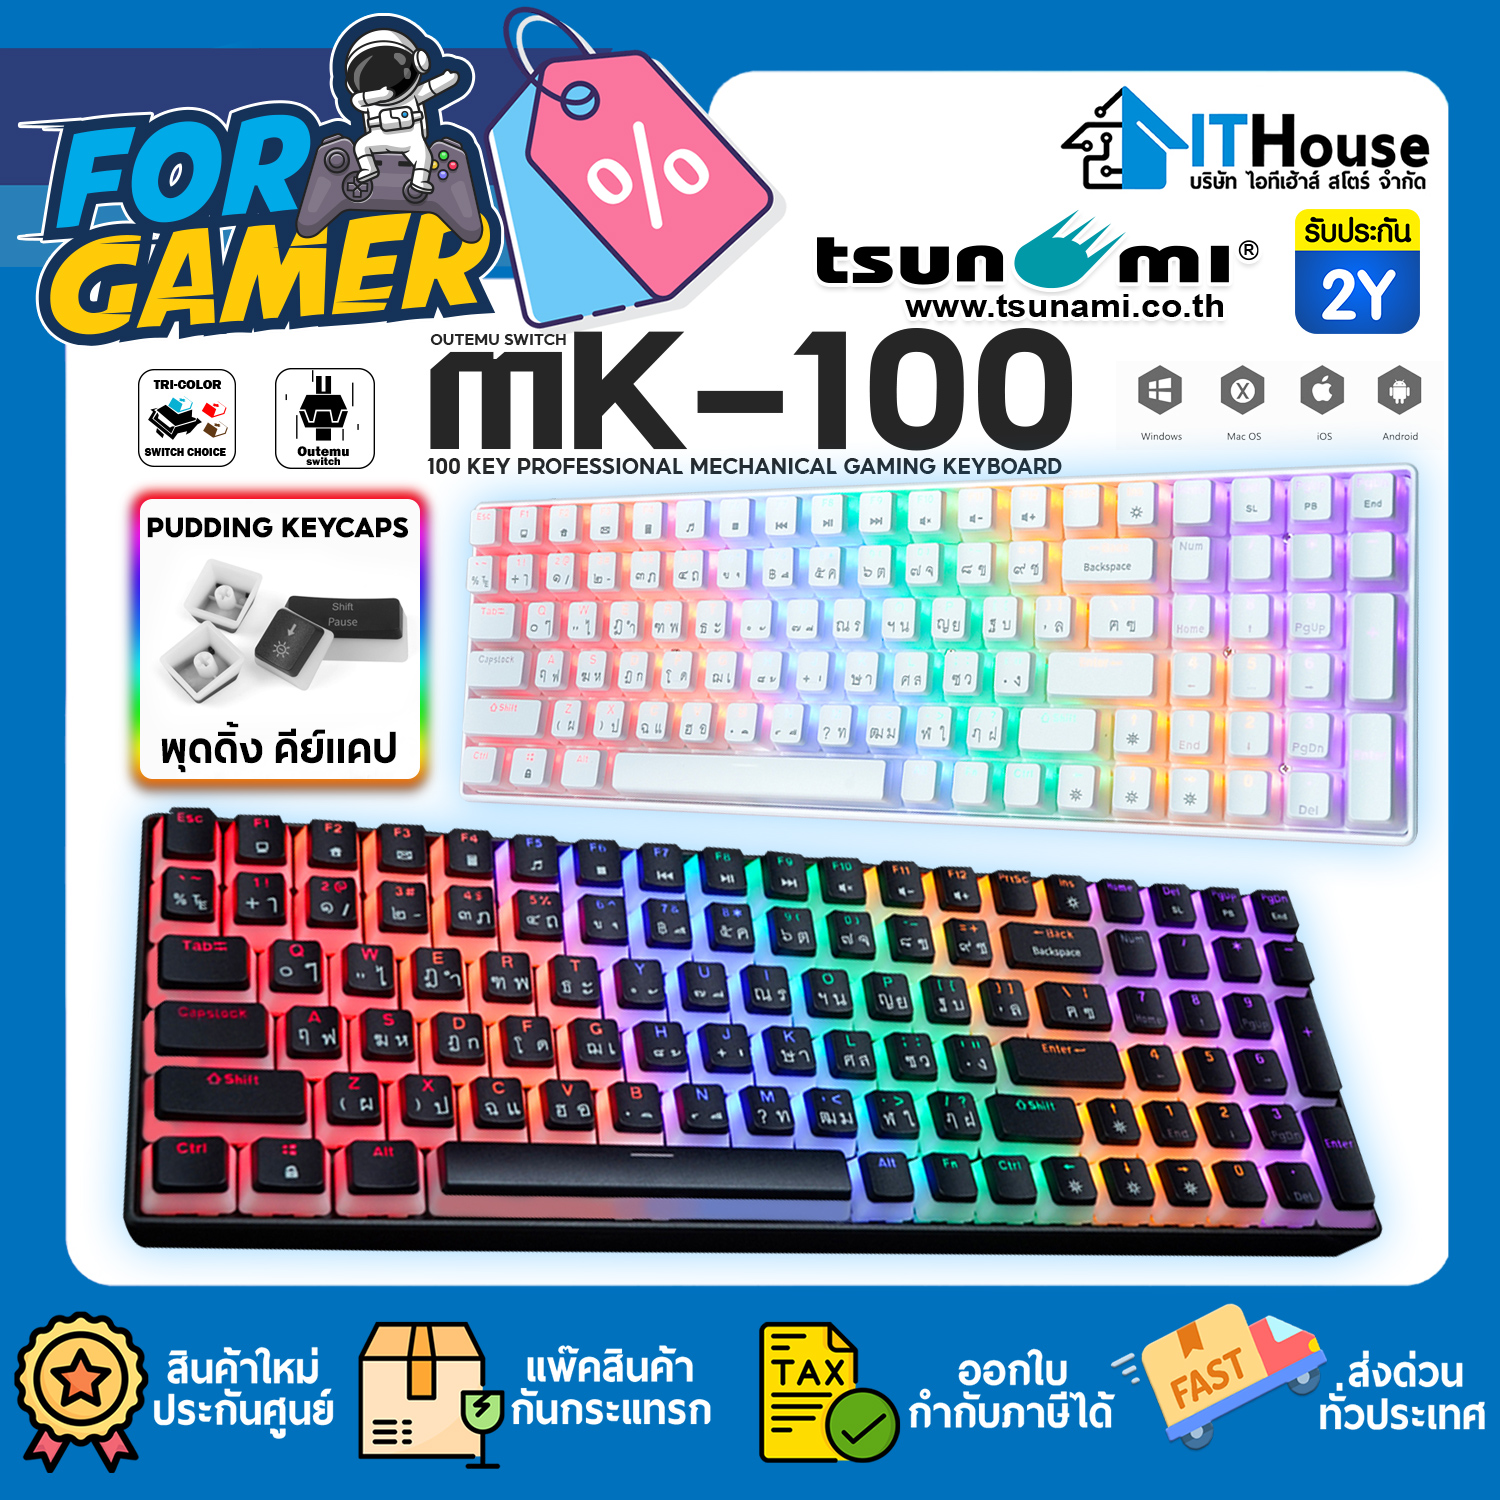 TSUNAMI OUTEMU PUDDING MK-100 Gaming Keyboard(MYSTIC BLACK BLUE)